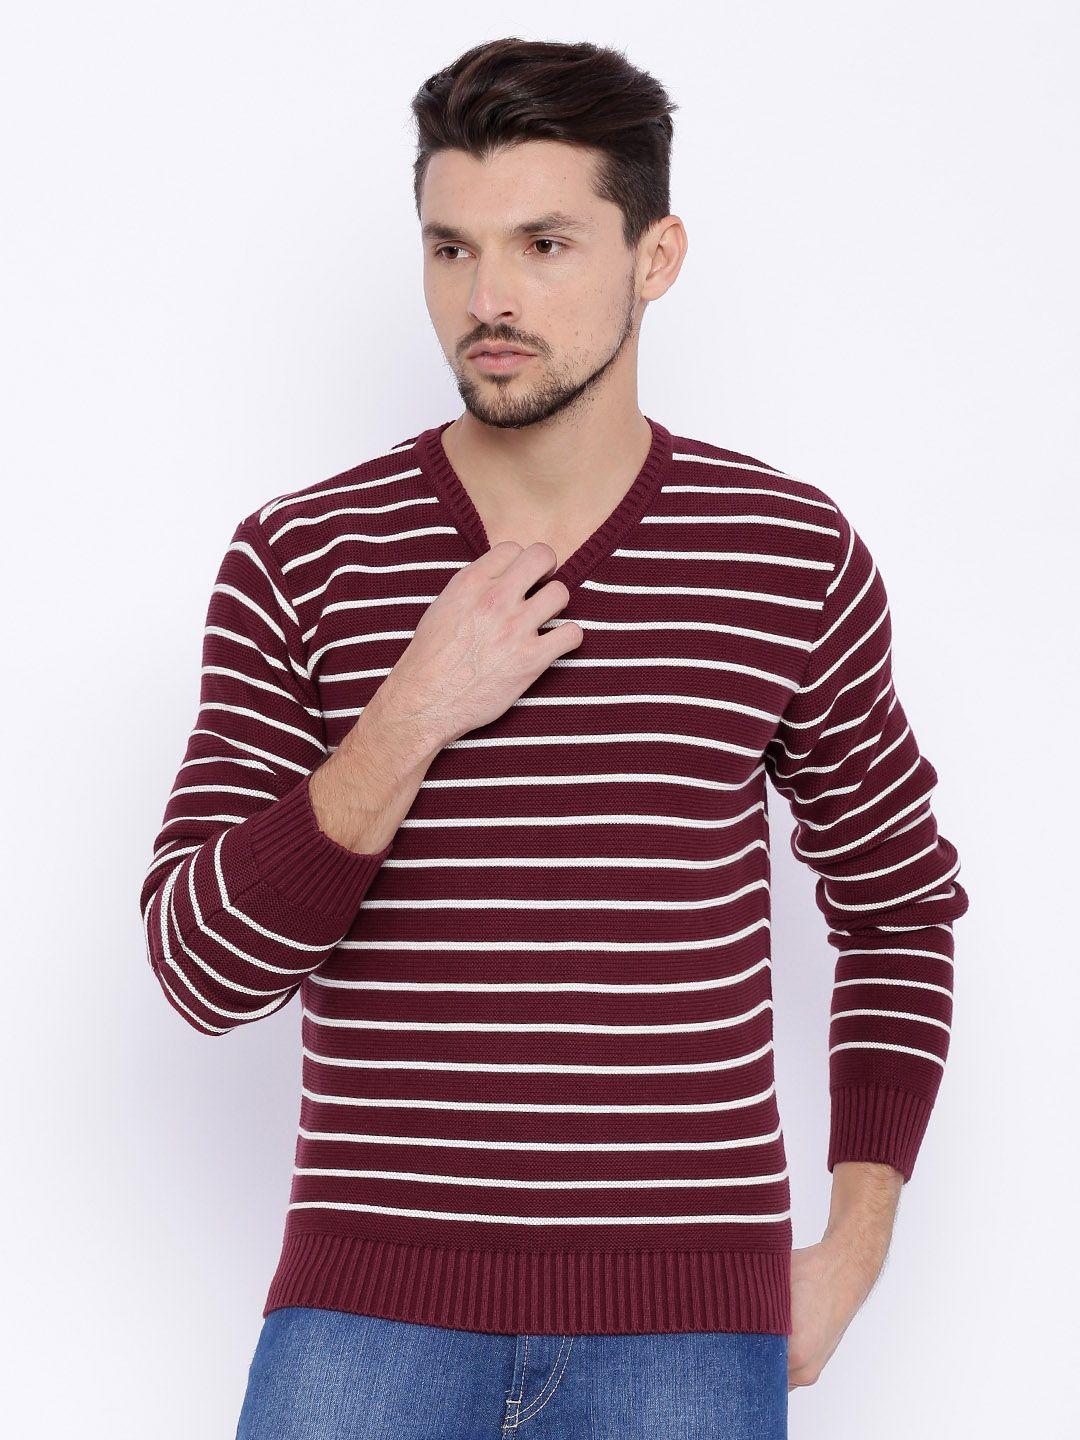 basics-maroon-&-white-striped-sweater